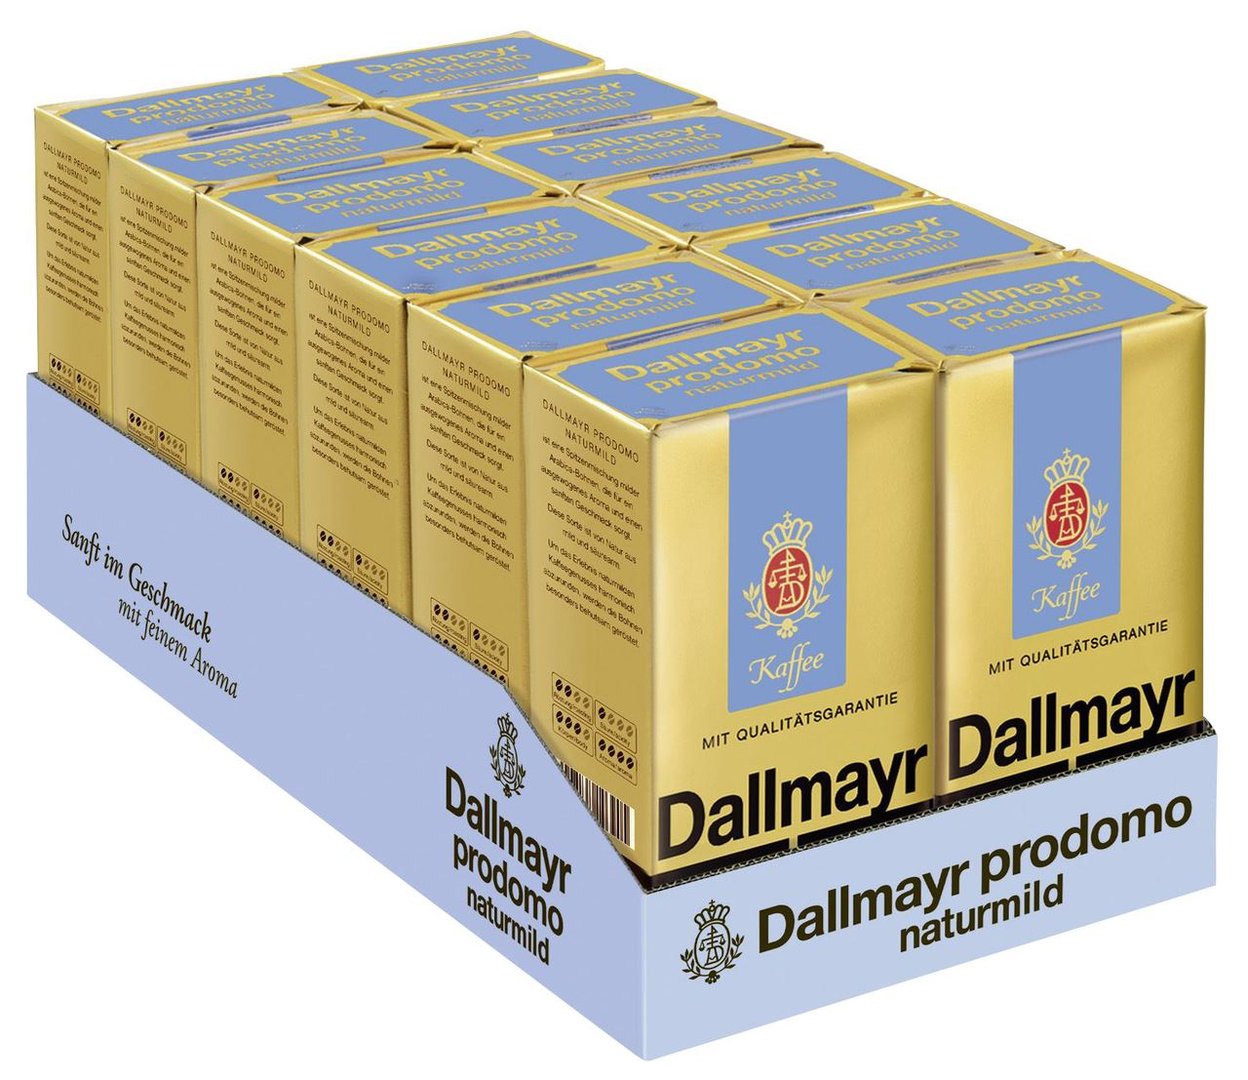 Dallmayr Prodomo, naturmild gemahlen, vac.-verpackt 12 x 500 g Vac.-Packungen